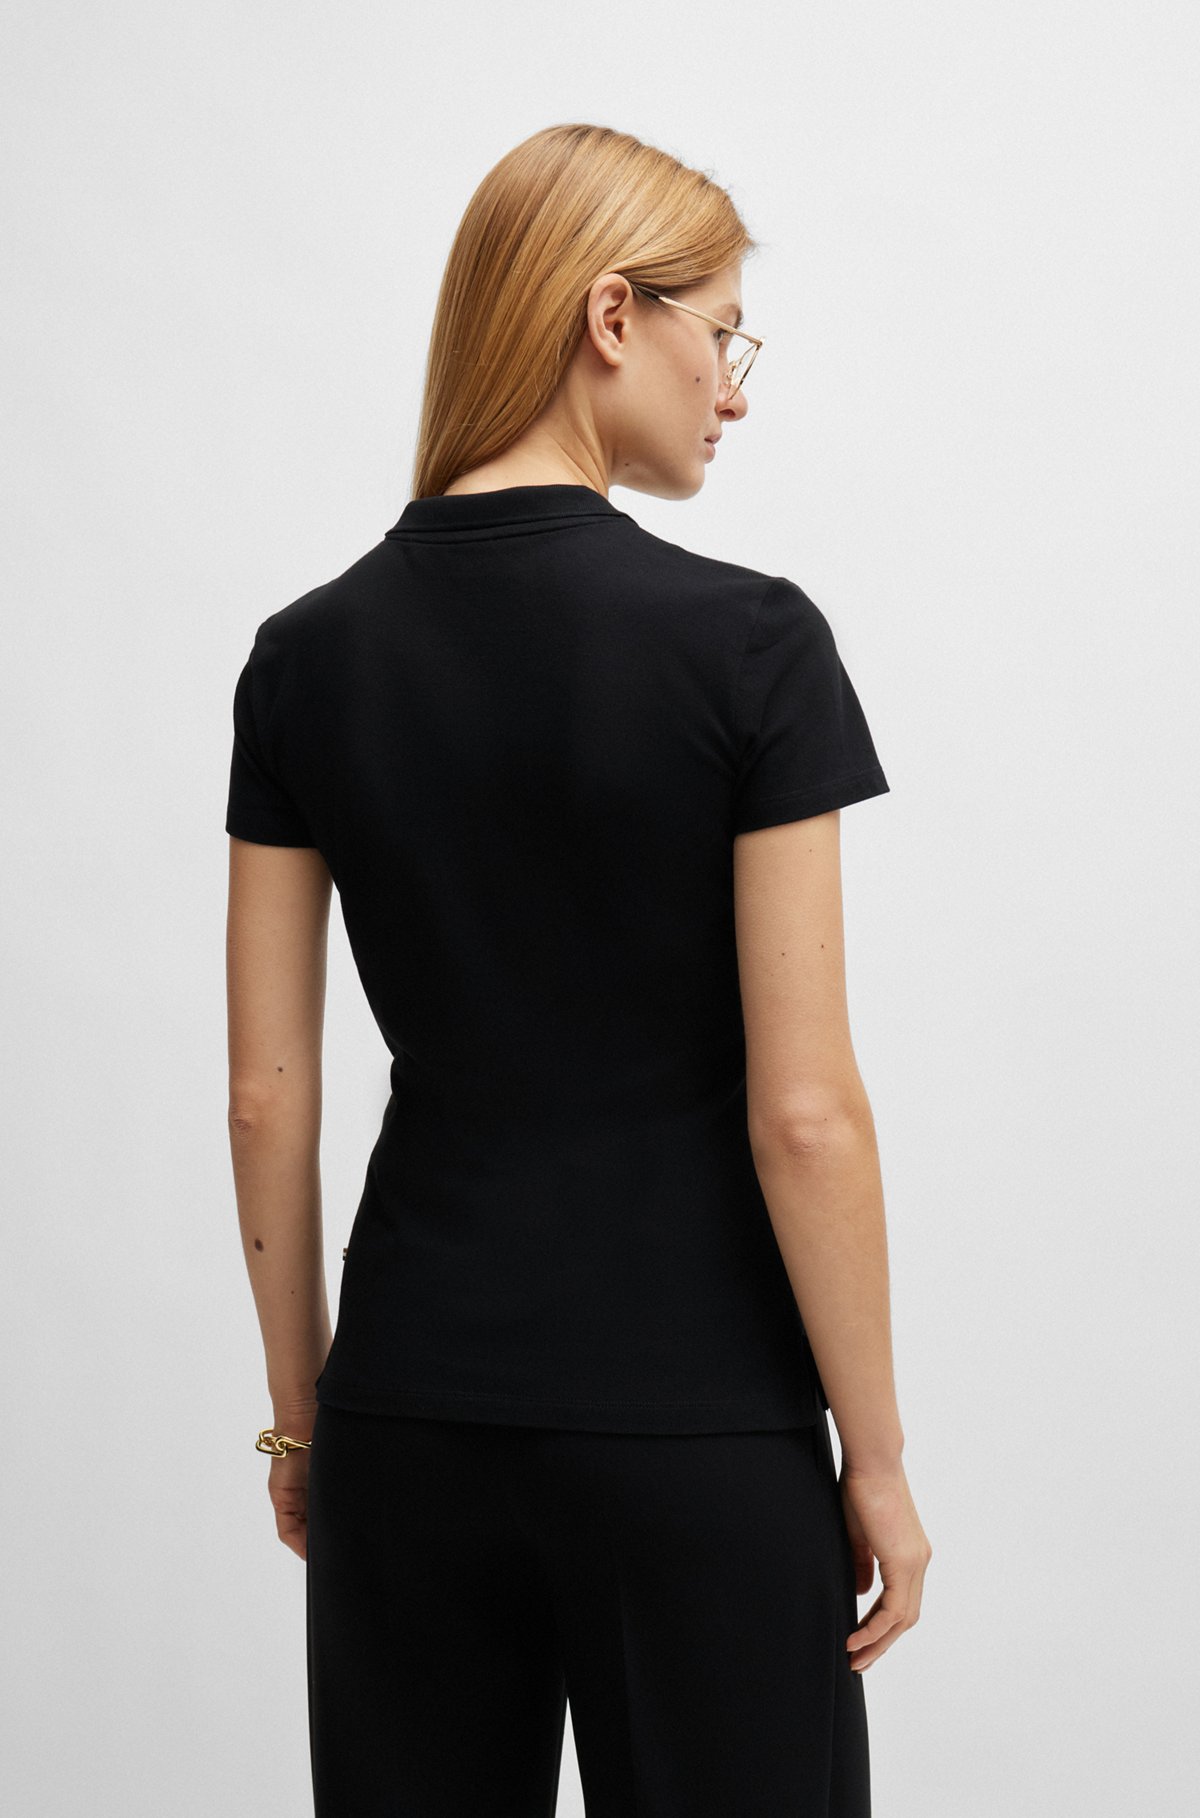 Cotton-piqué polo shirt with logo detail, Black